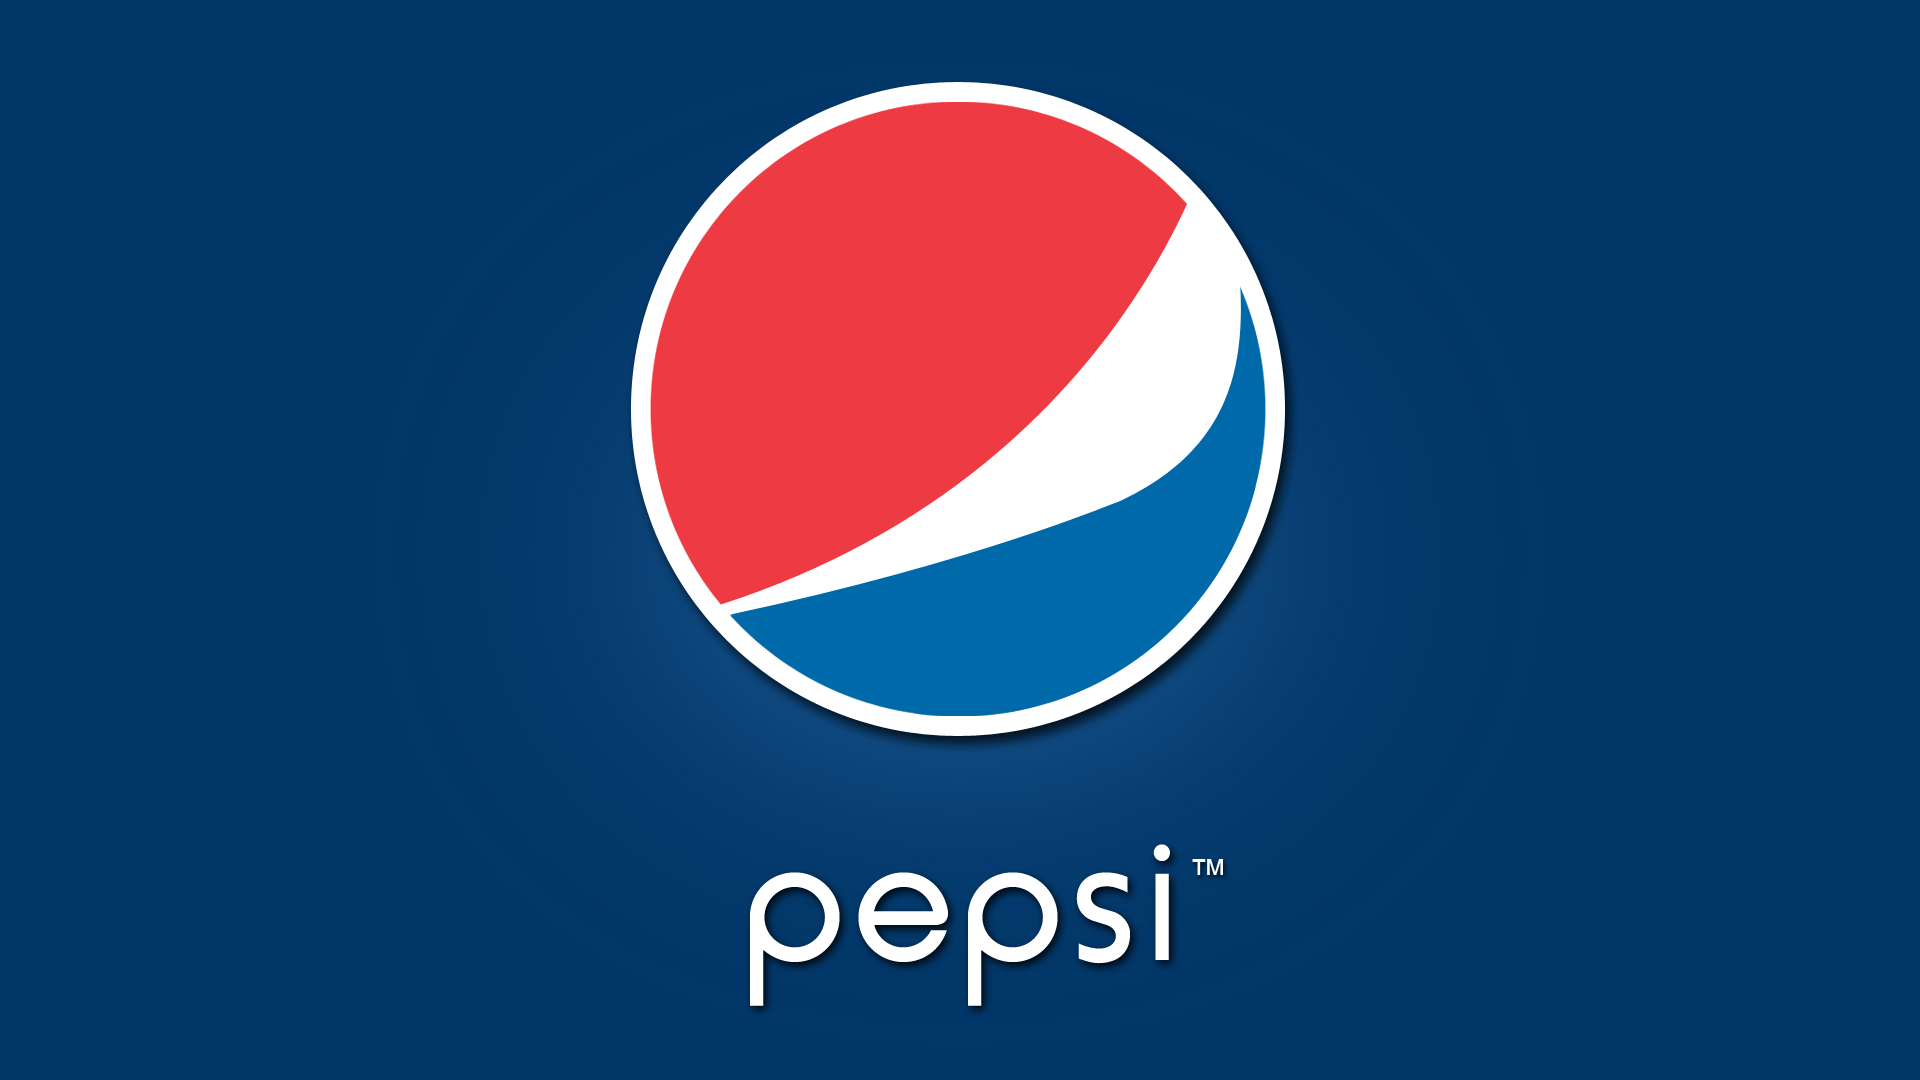 Cola Evaluation: Pepsi, Coke or Neither?